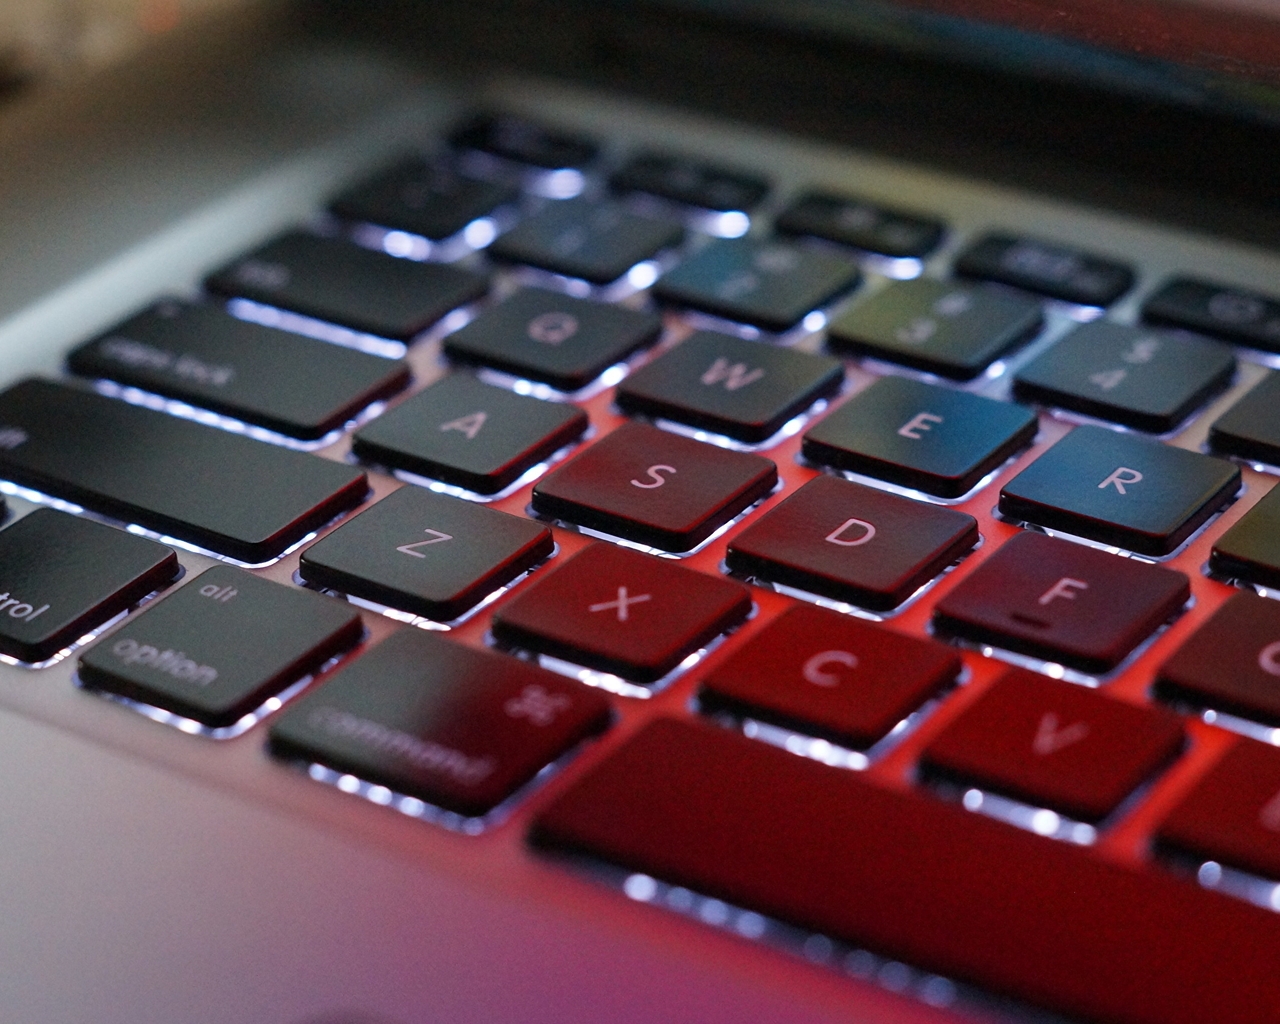 Image: Keys, buttons, glow, keyboard, laptop, notation